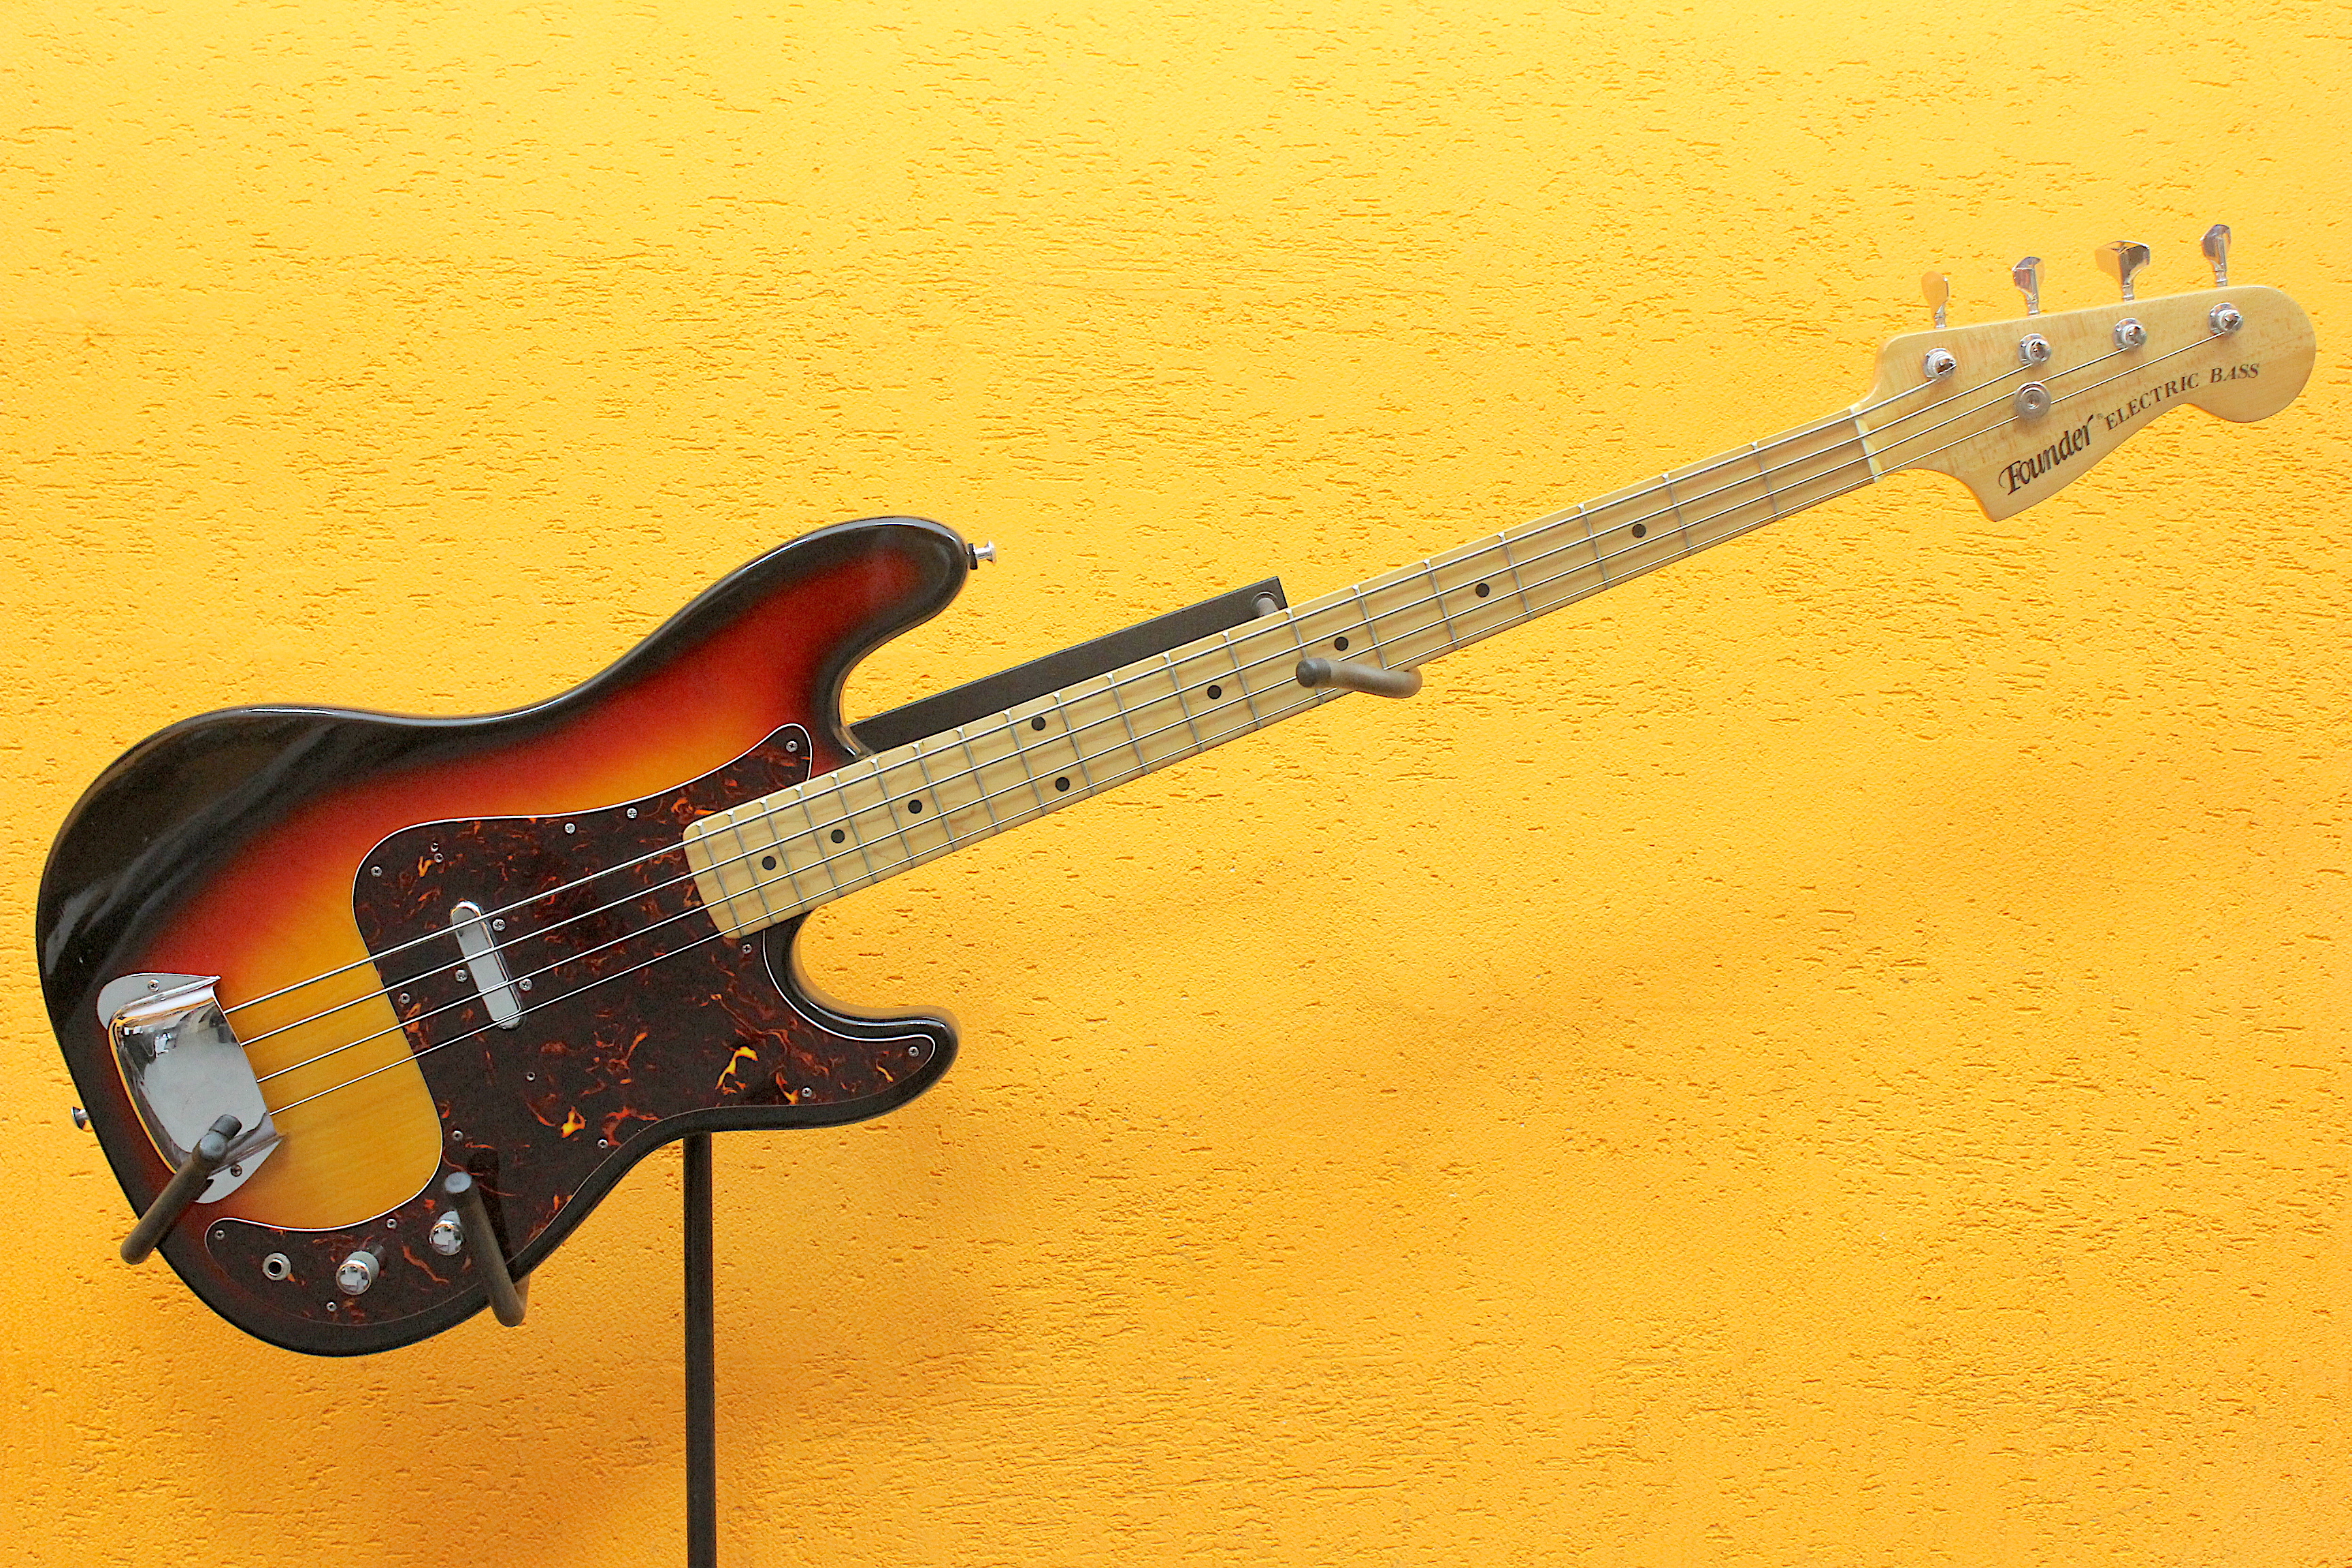 Greco PJB-300 Precision Bass. SX Precision Bass. Precision Bass альтернативный форма. Rockdale Precision Bass. Басс 21